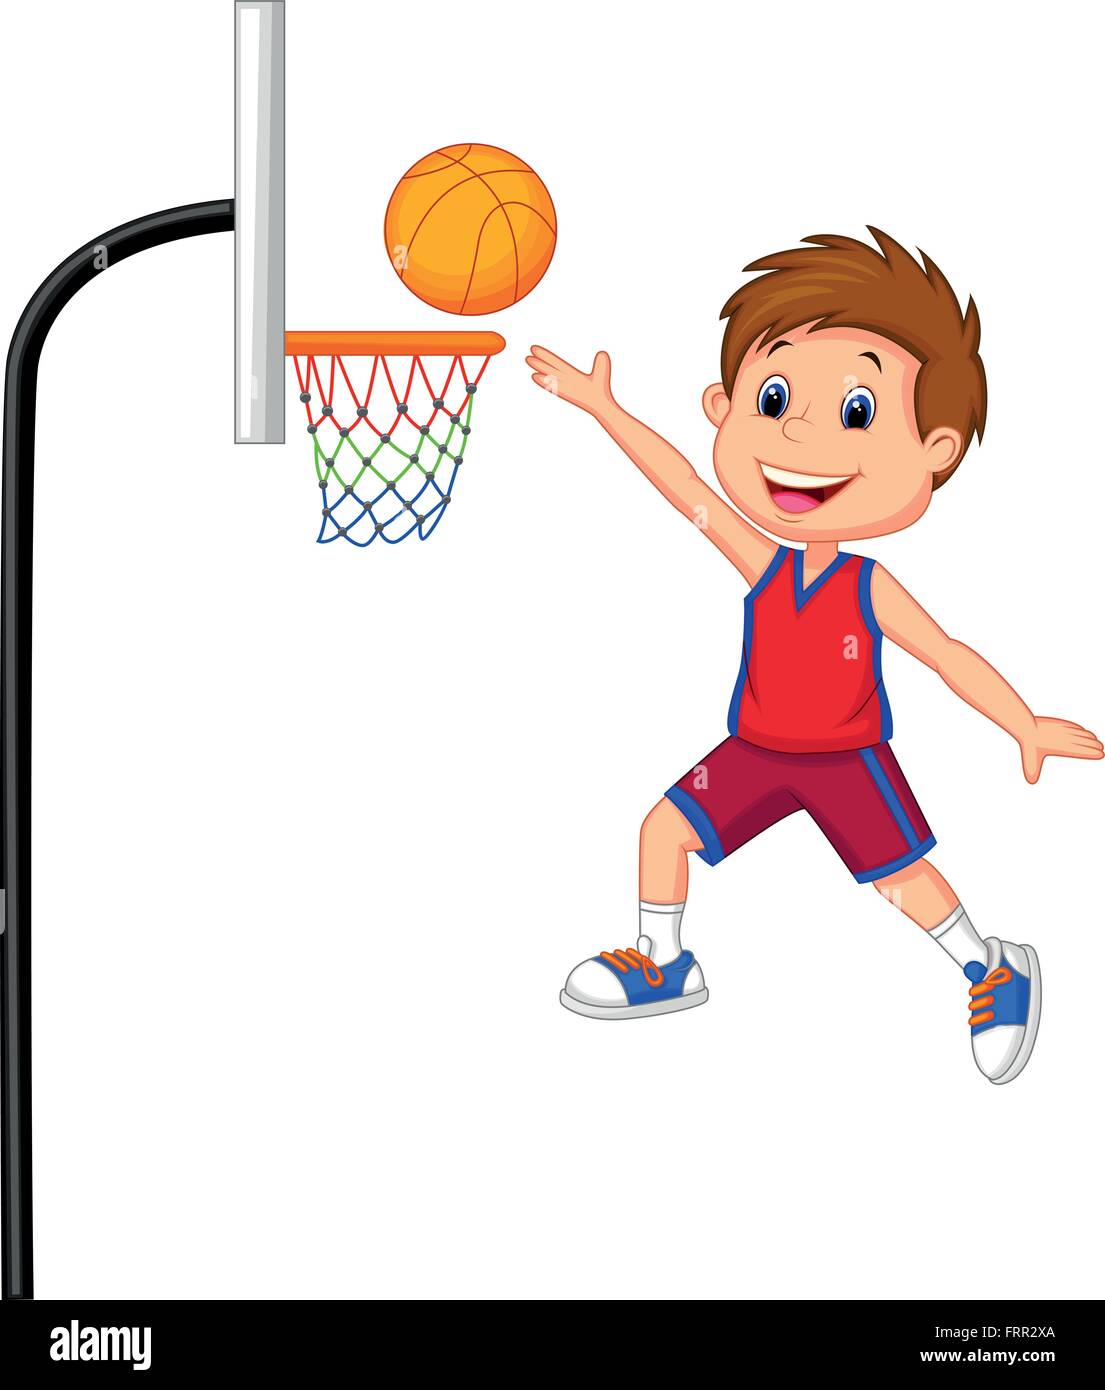 Cartoon kid playing basketball Image Vectorielle Stock - Alamy